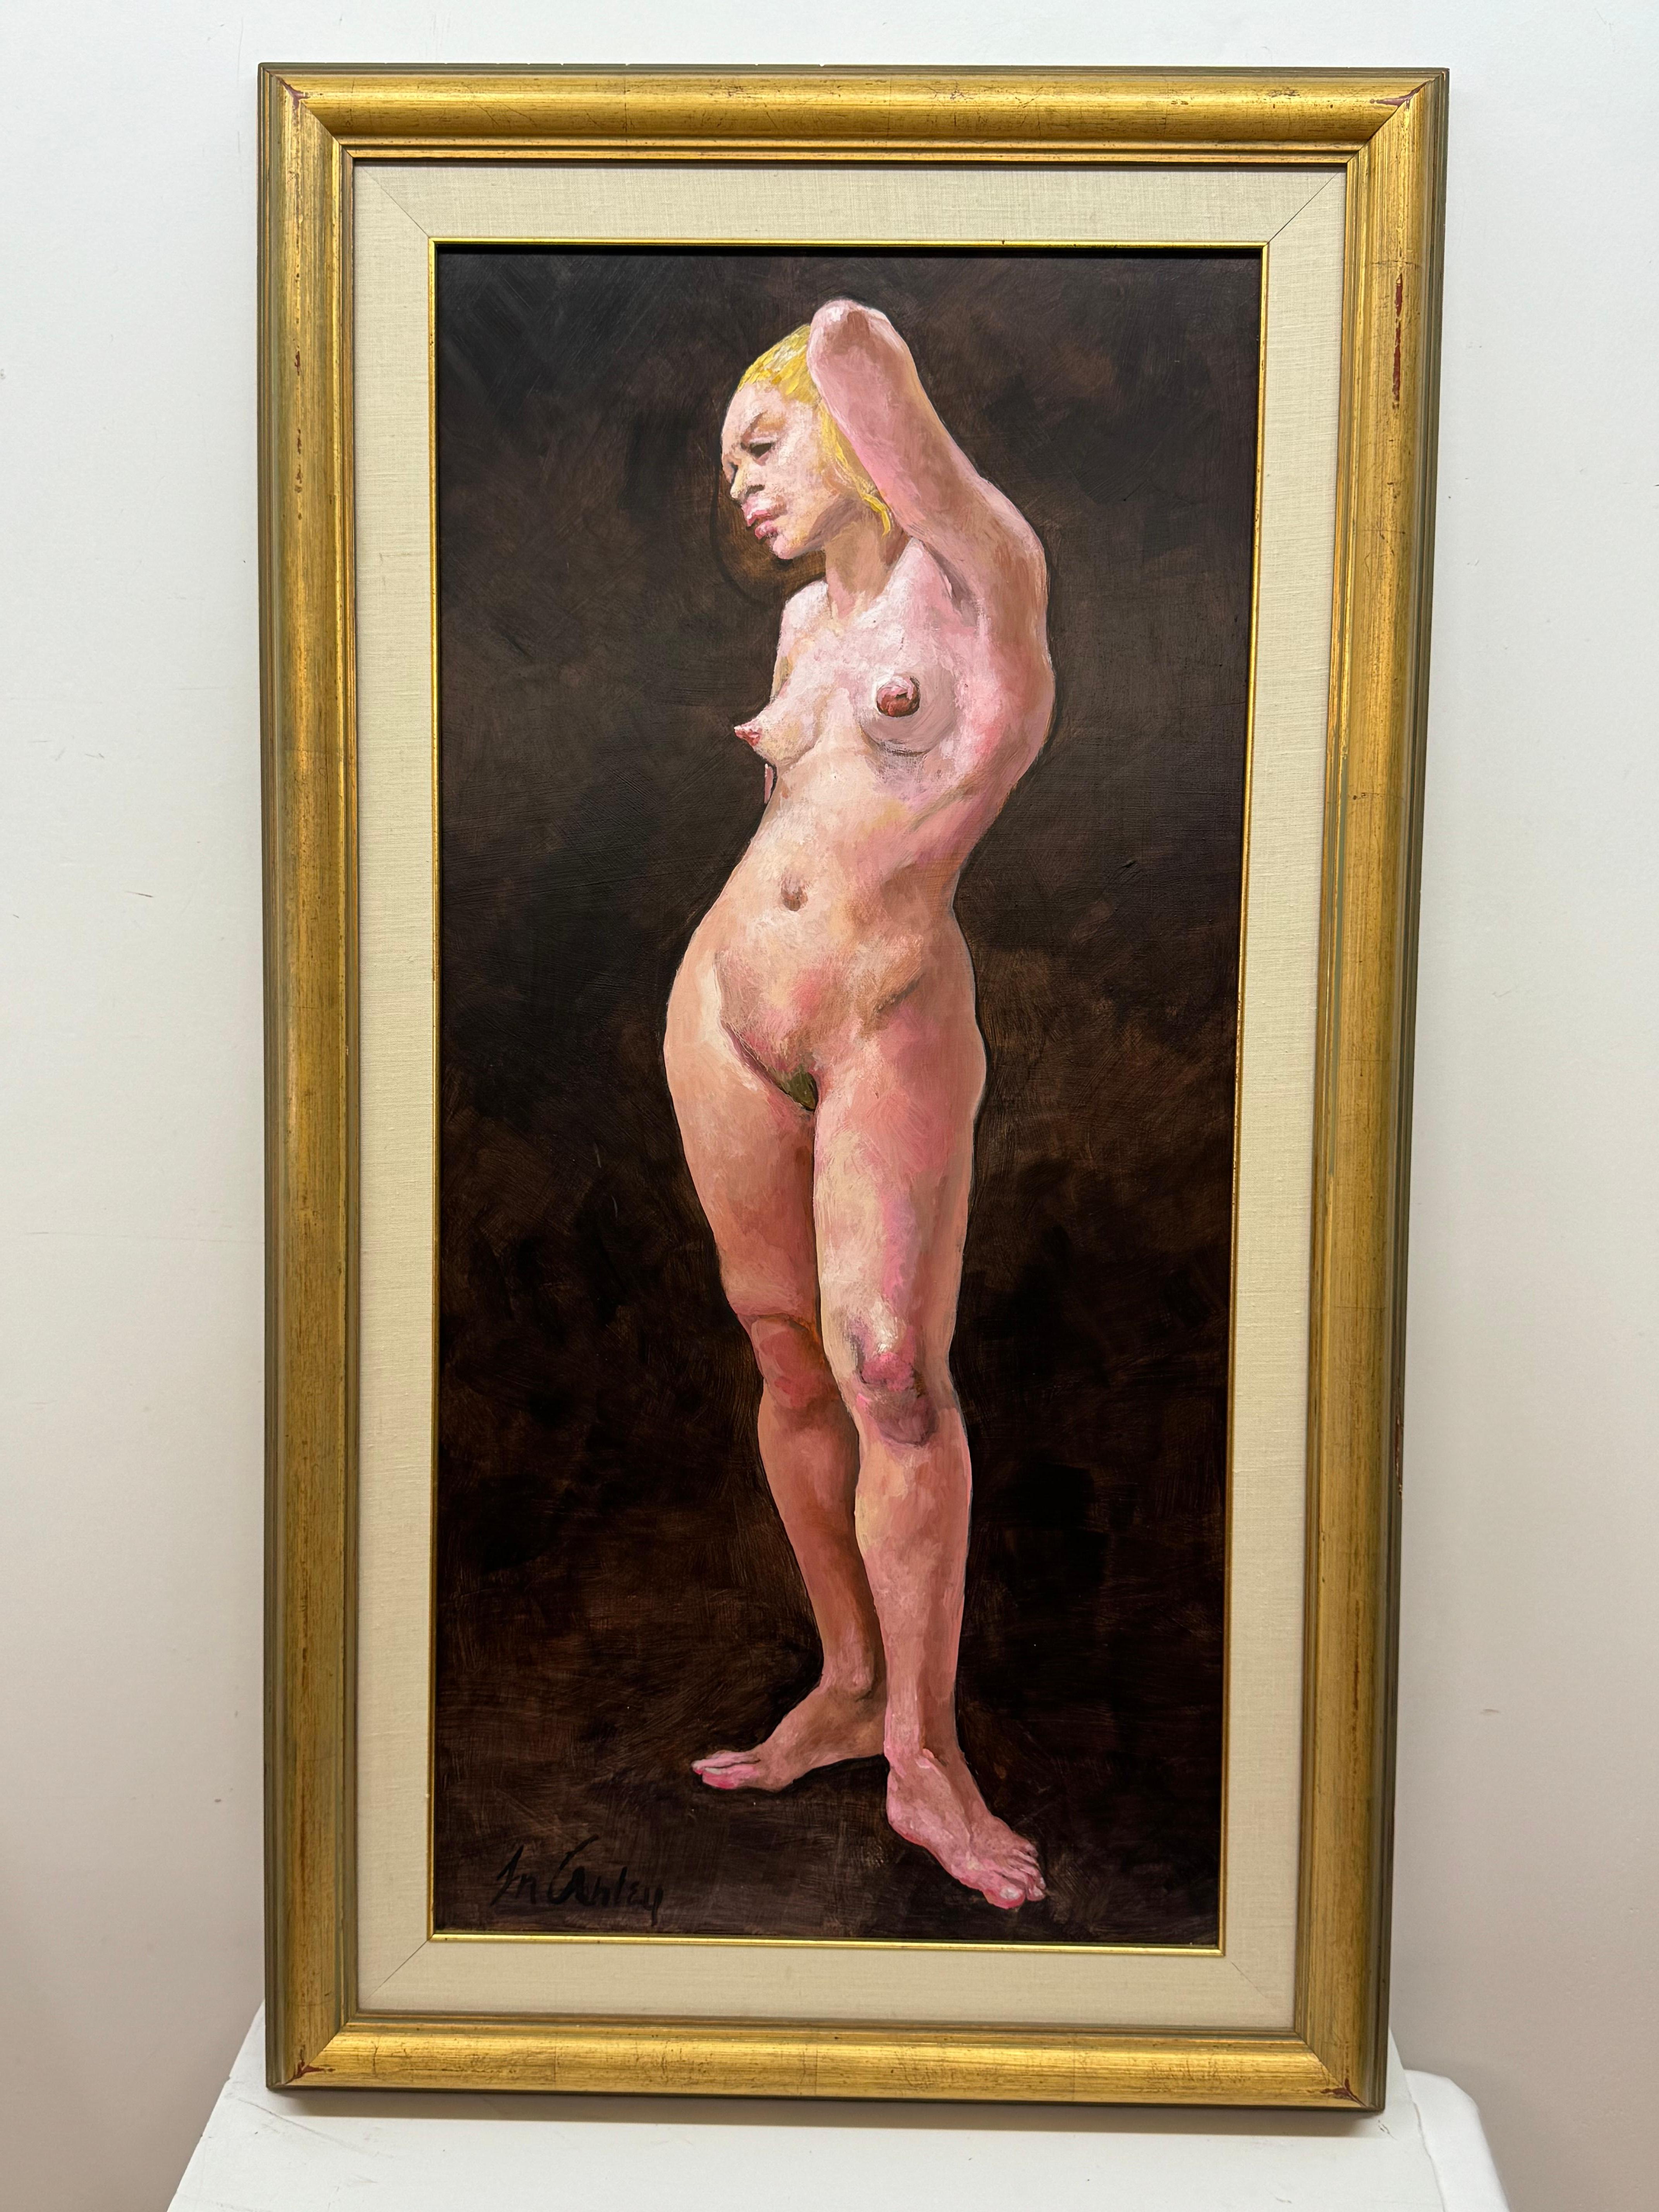 Frank N Ashley (1920-2007) "nude #2 remarkable breast" female nude portrait

Oil on masonite

2002

19 x 39 unframed, 26 x 46 framed